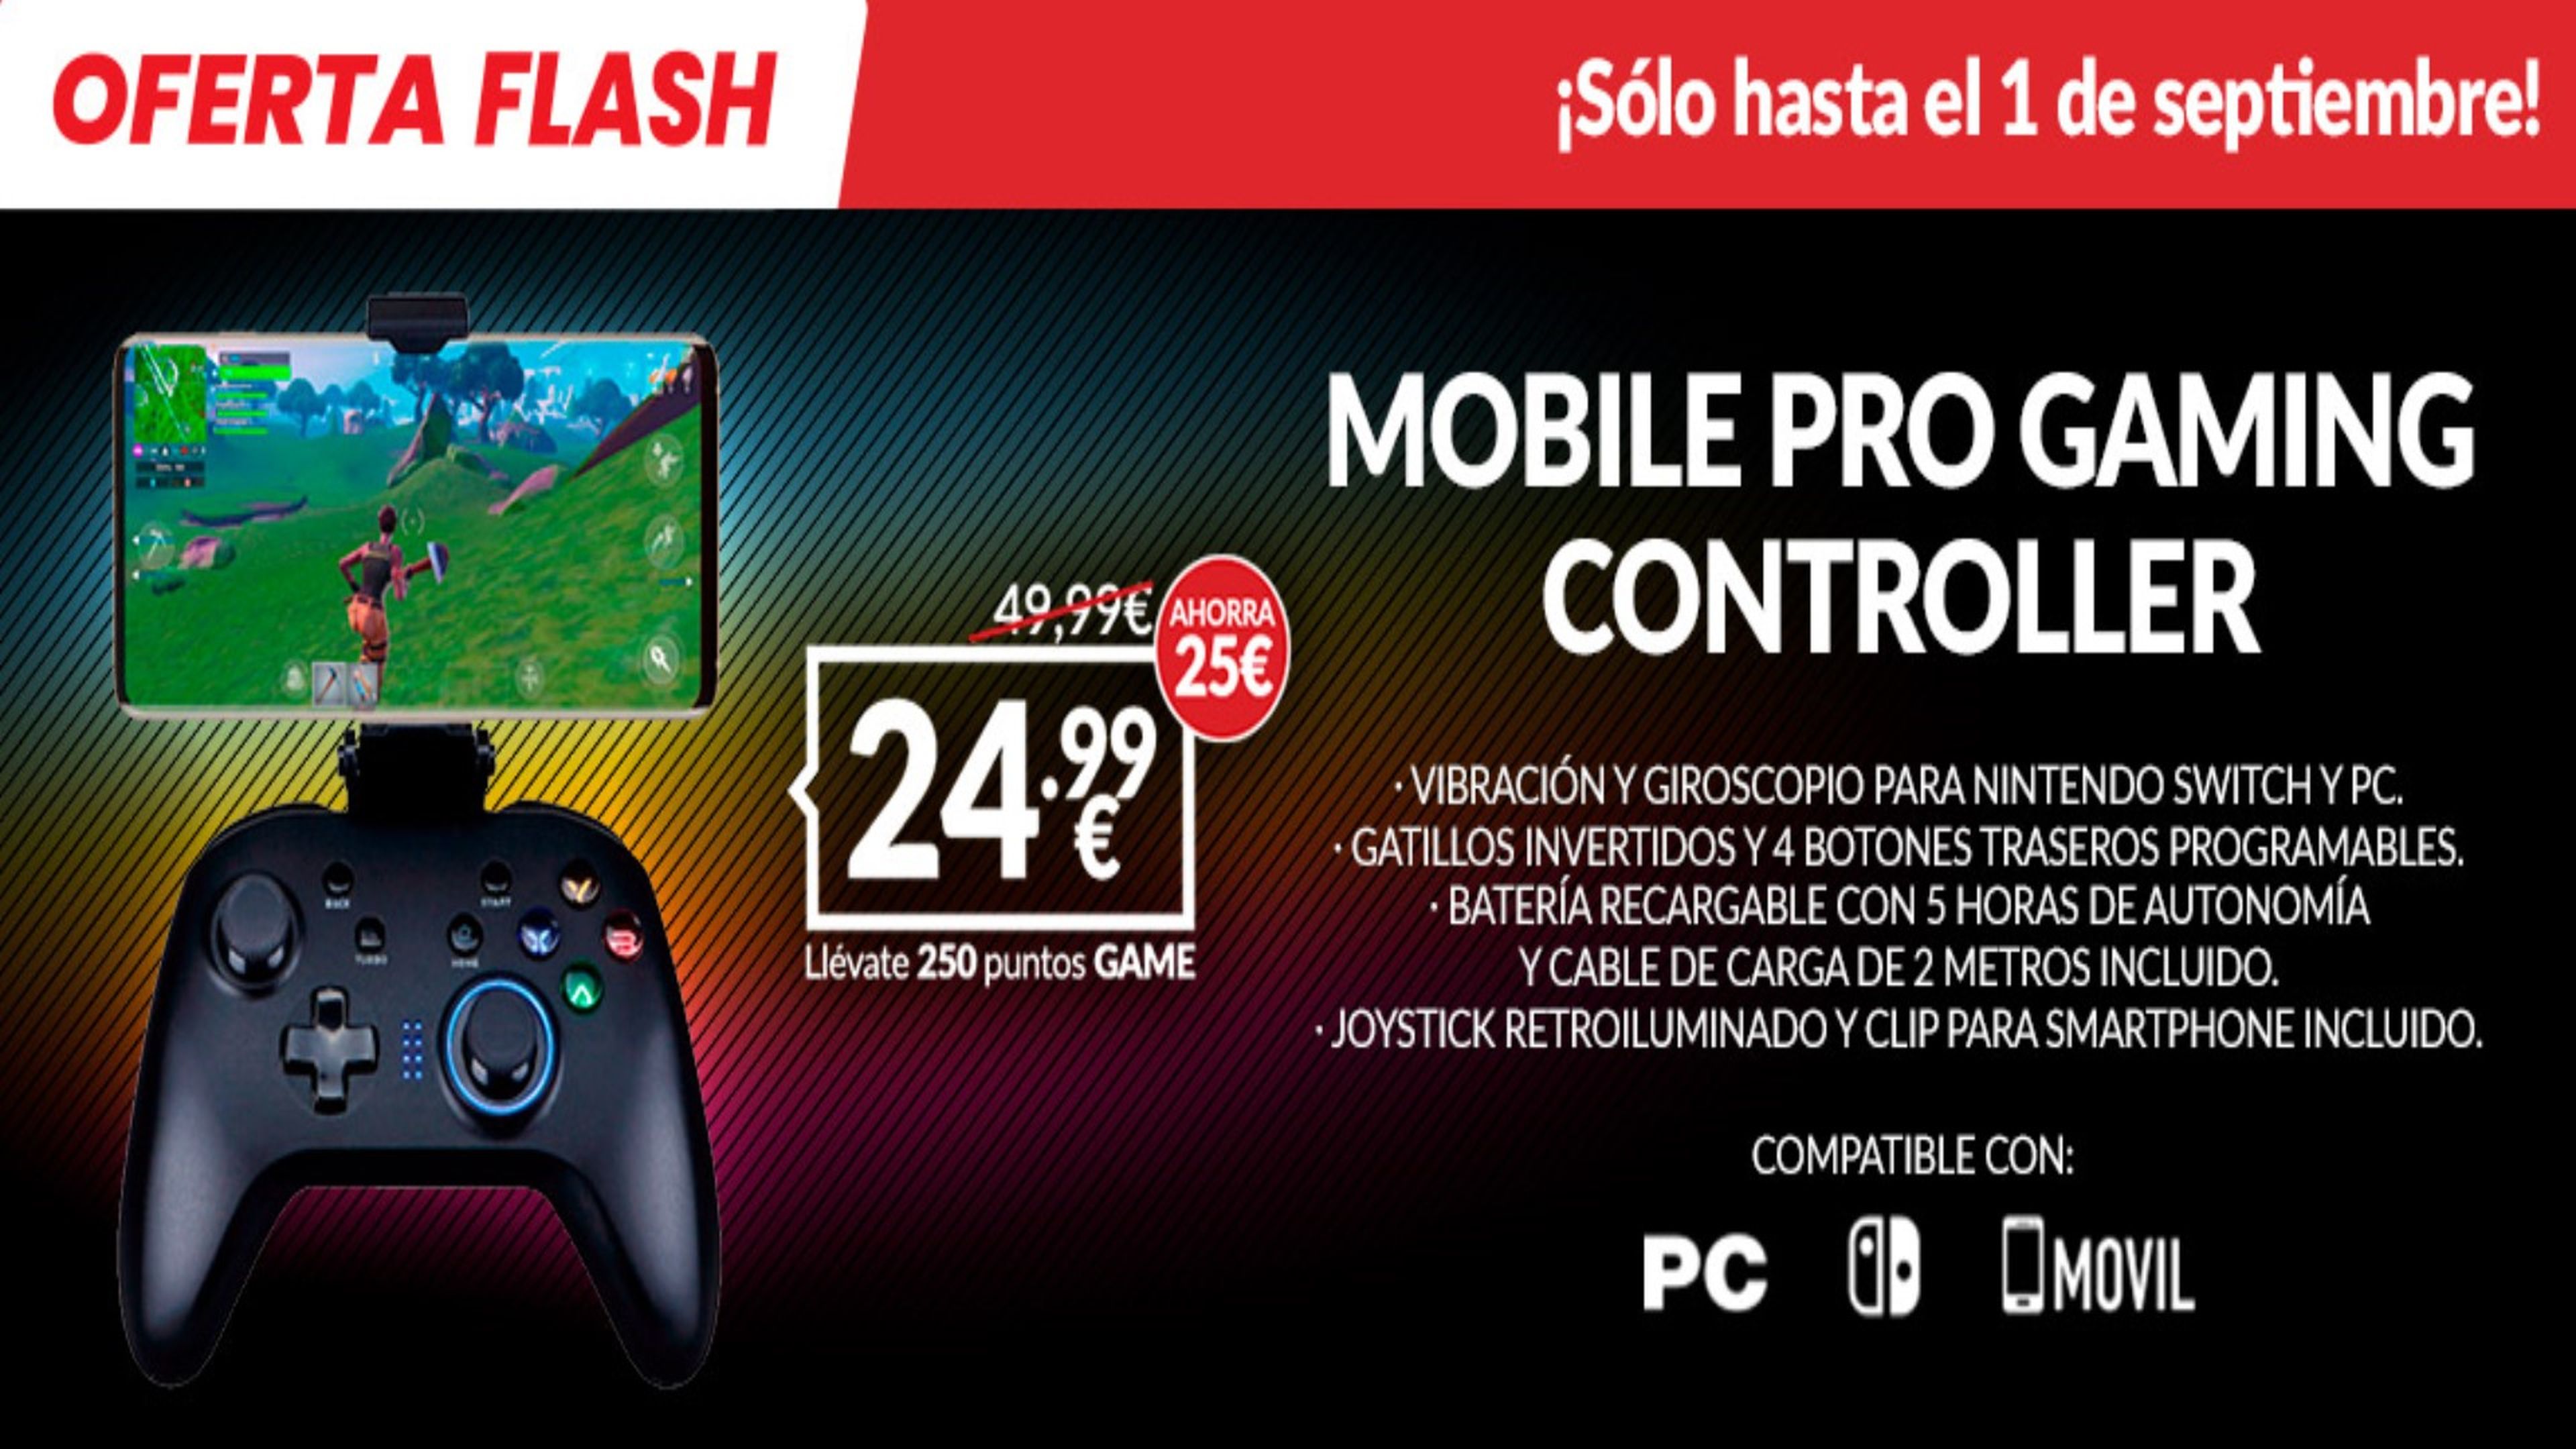 GAME rebaja en oferta flash el Mobile Pro Gaming Controller a 24,99€